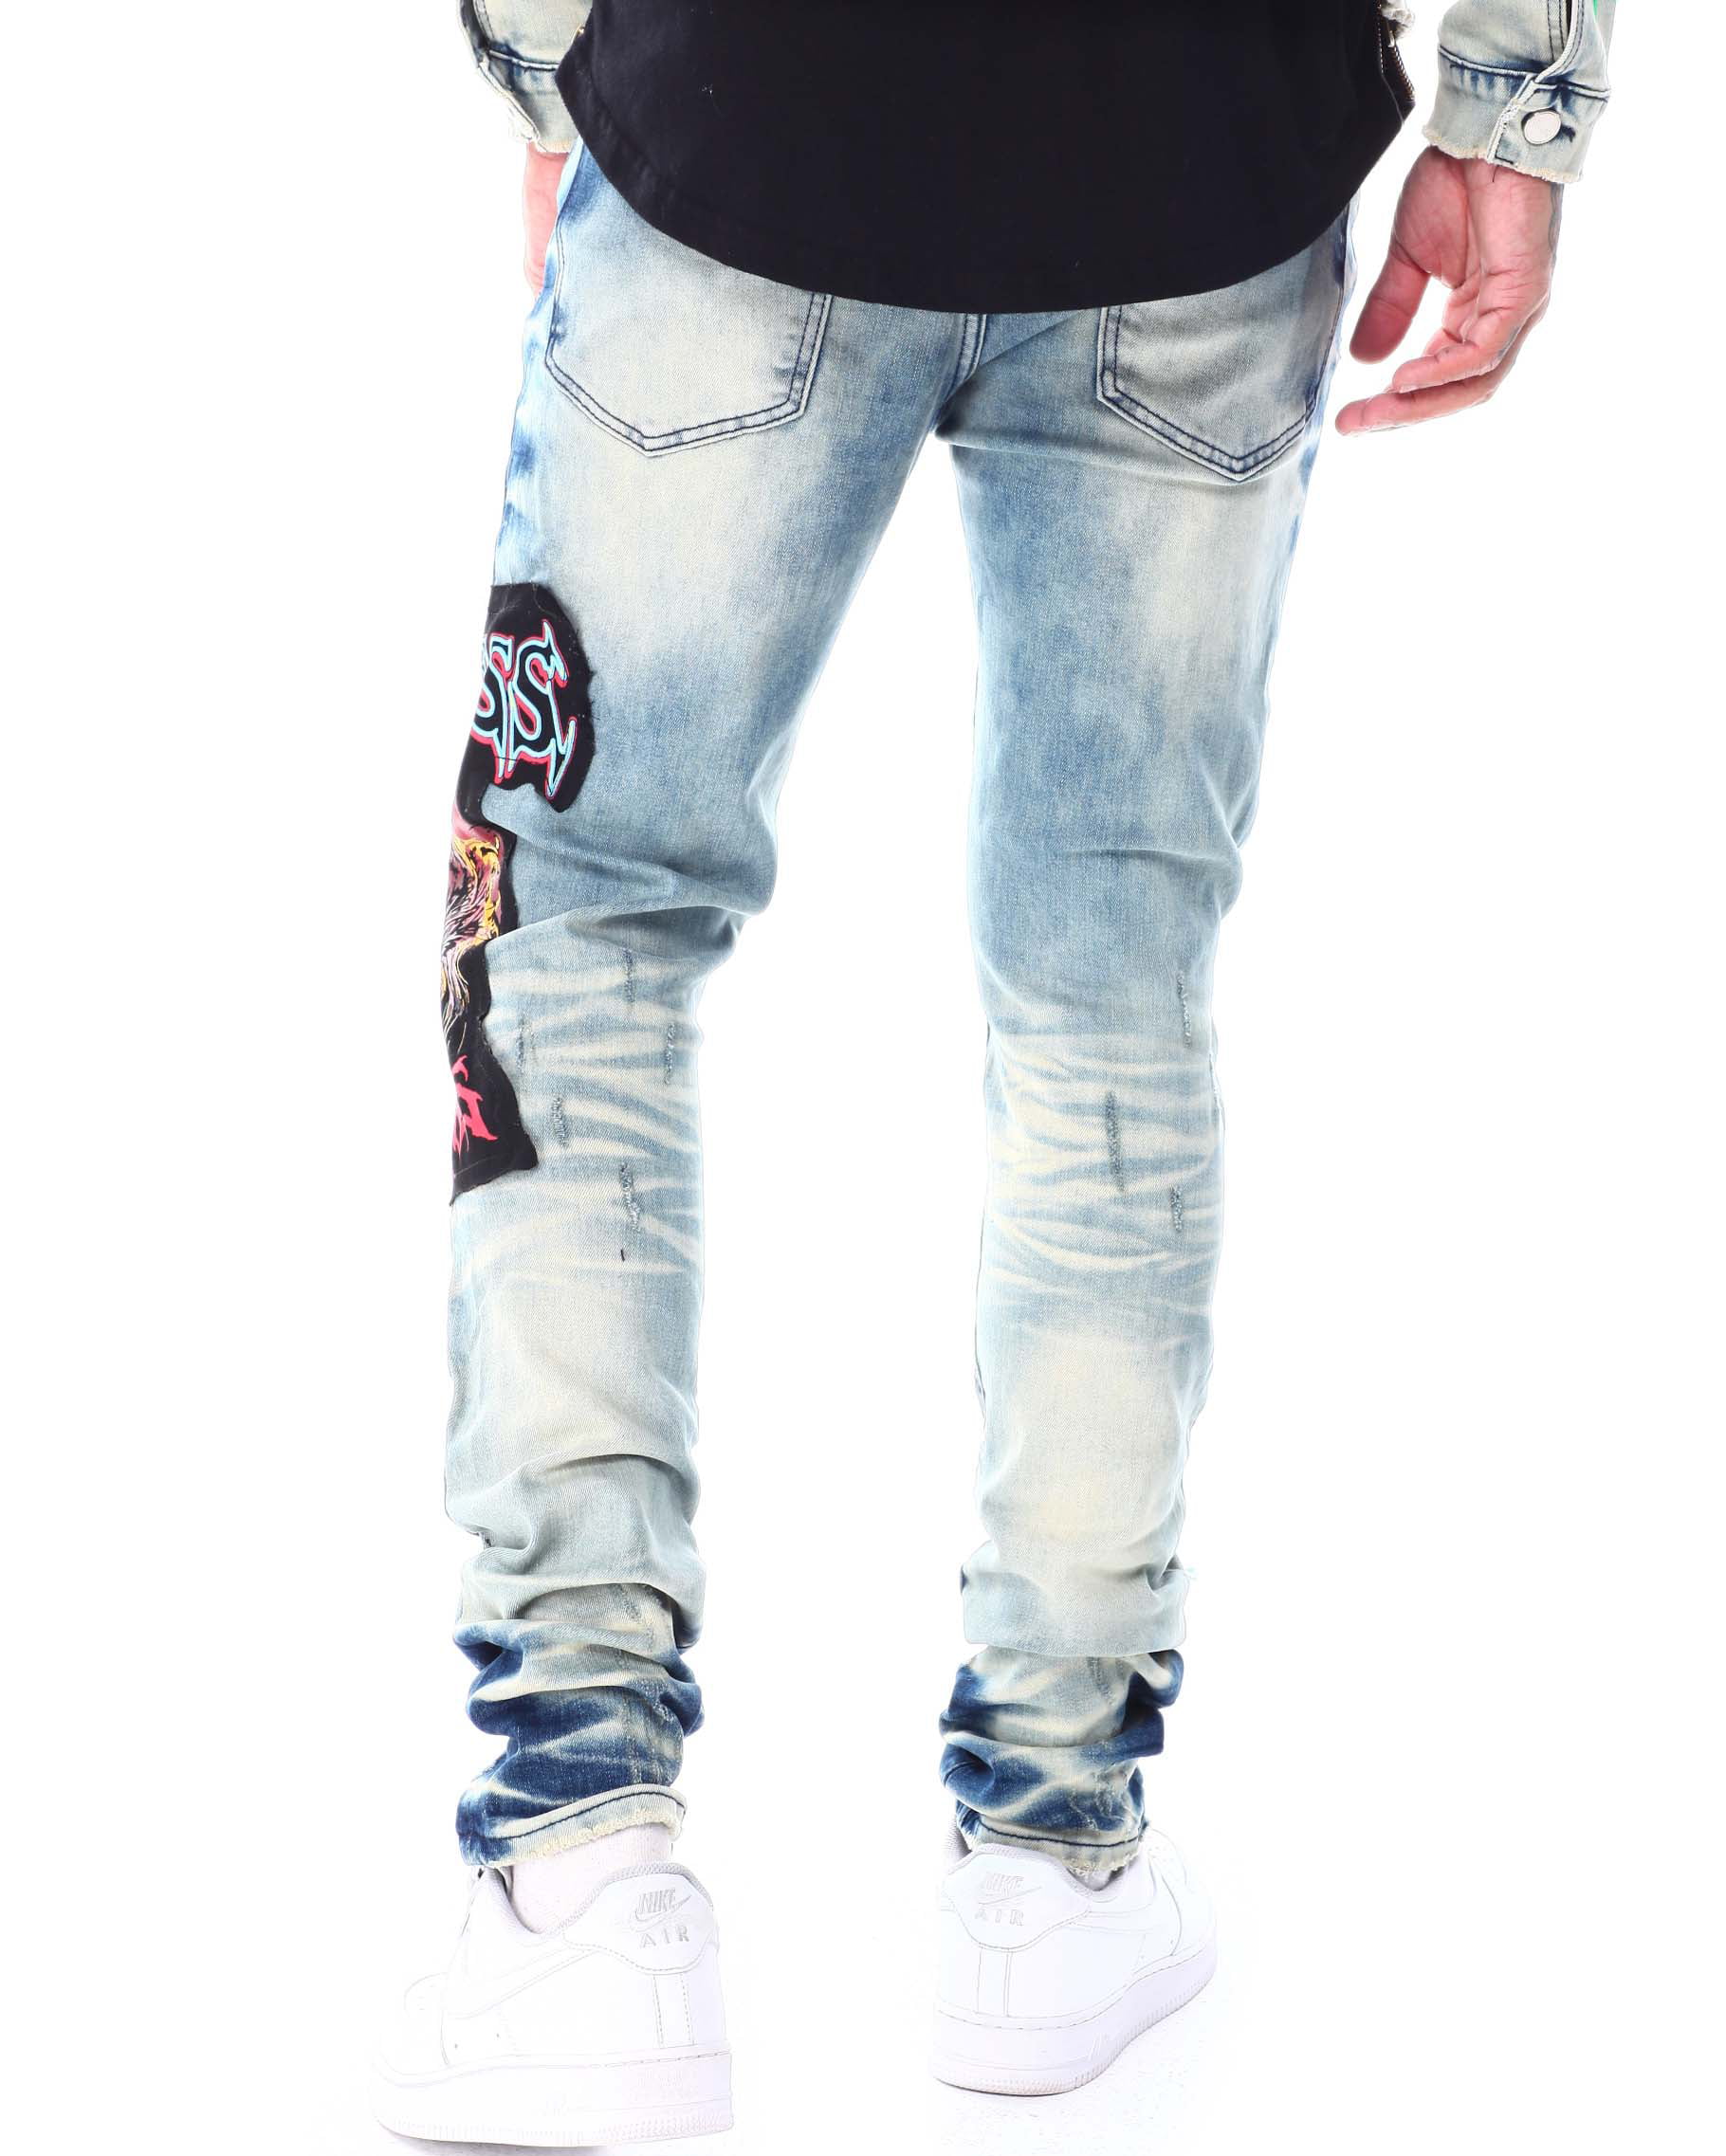 Jeans Los (36, GFTD Men\'s Details LA Painted Angeles Skinny Distressed Rip Ozz Blue) Fit